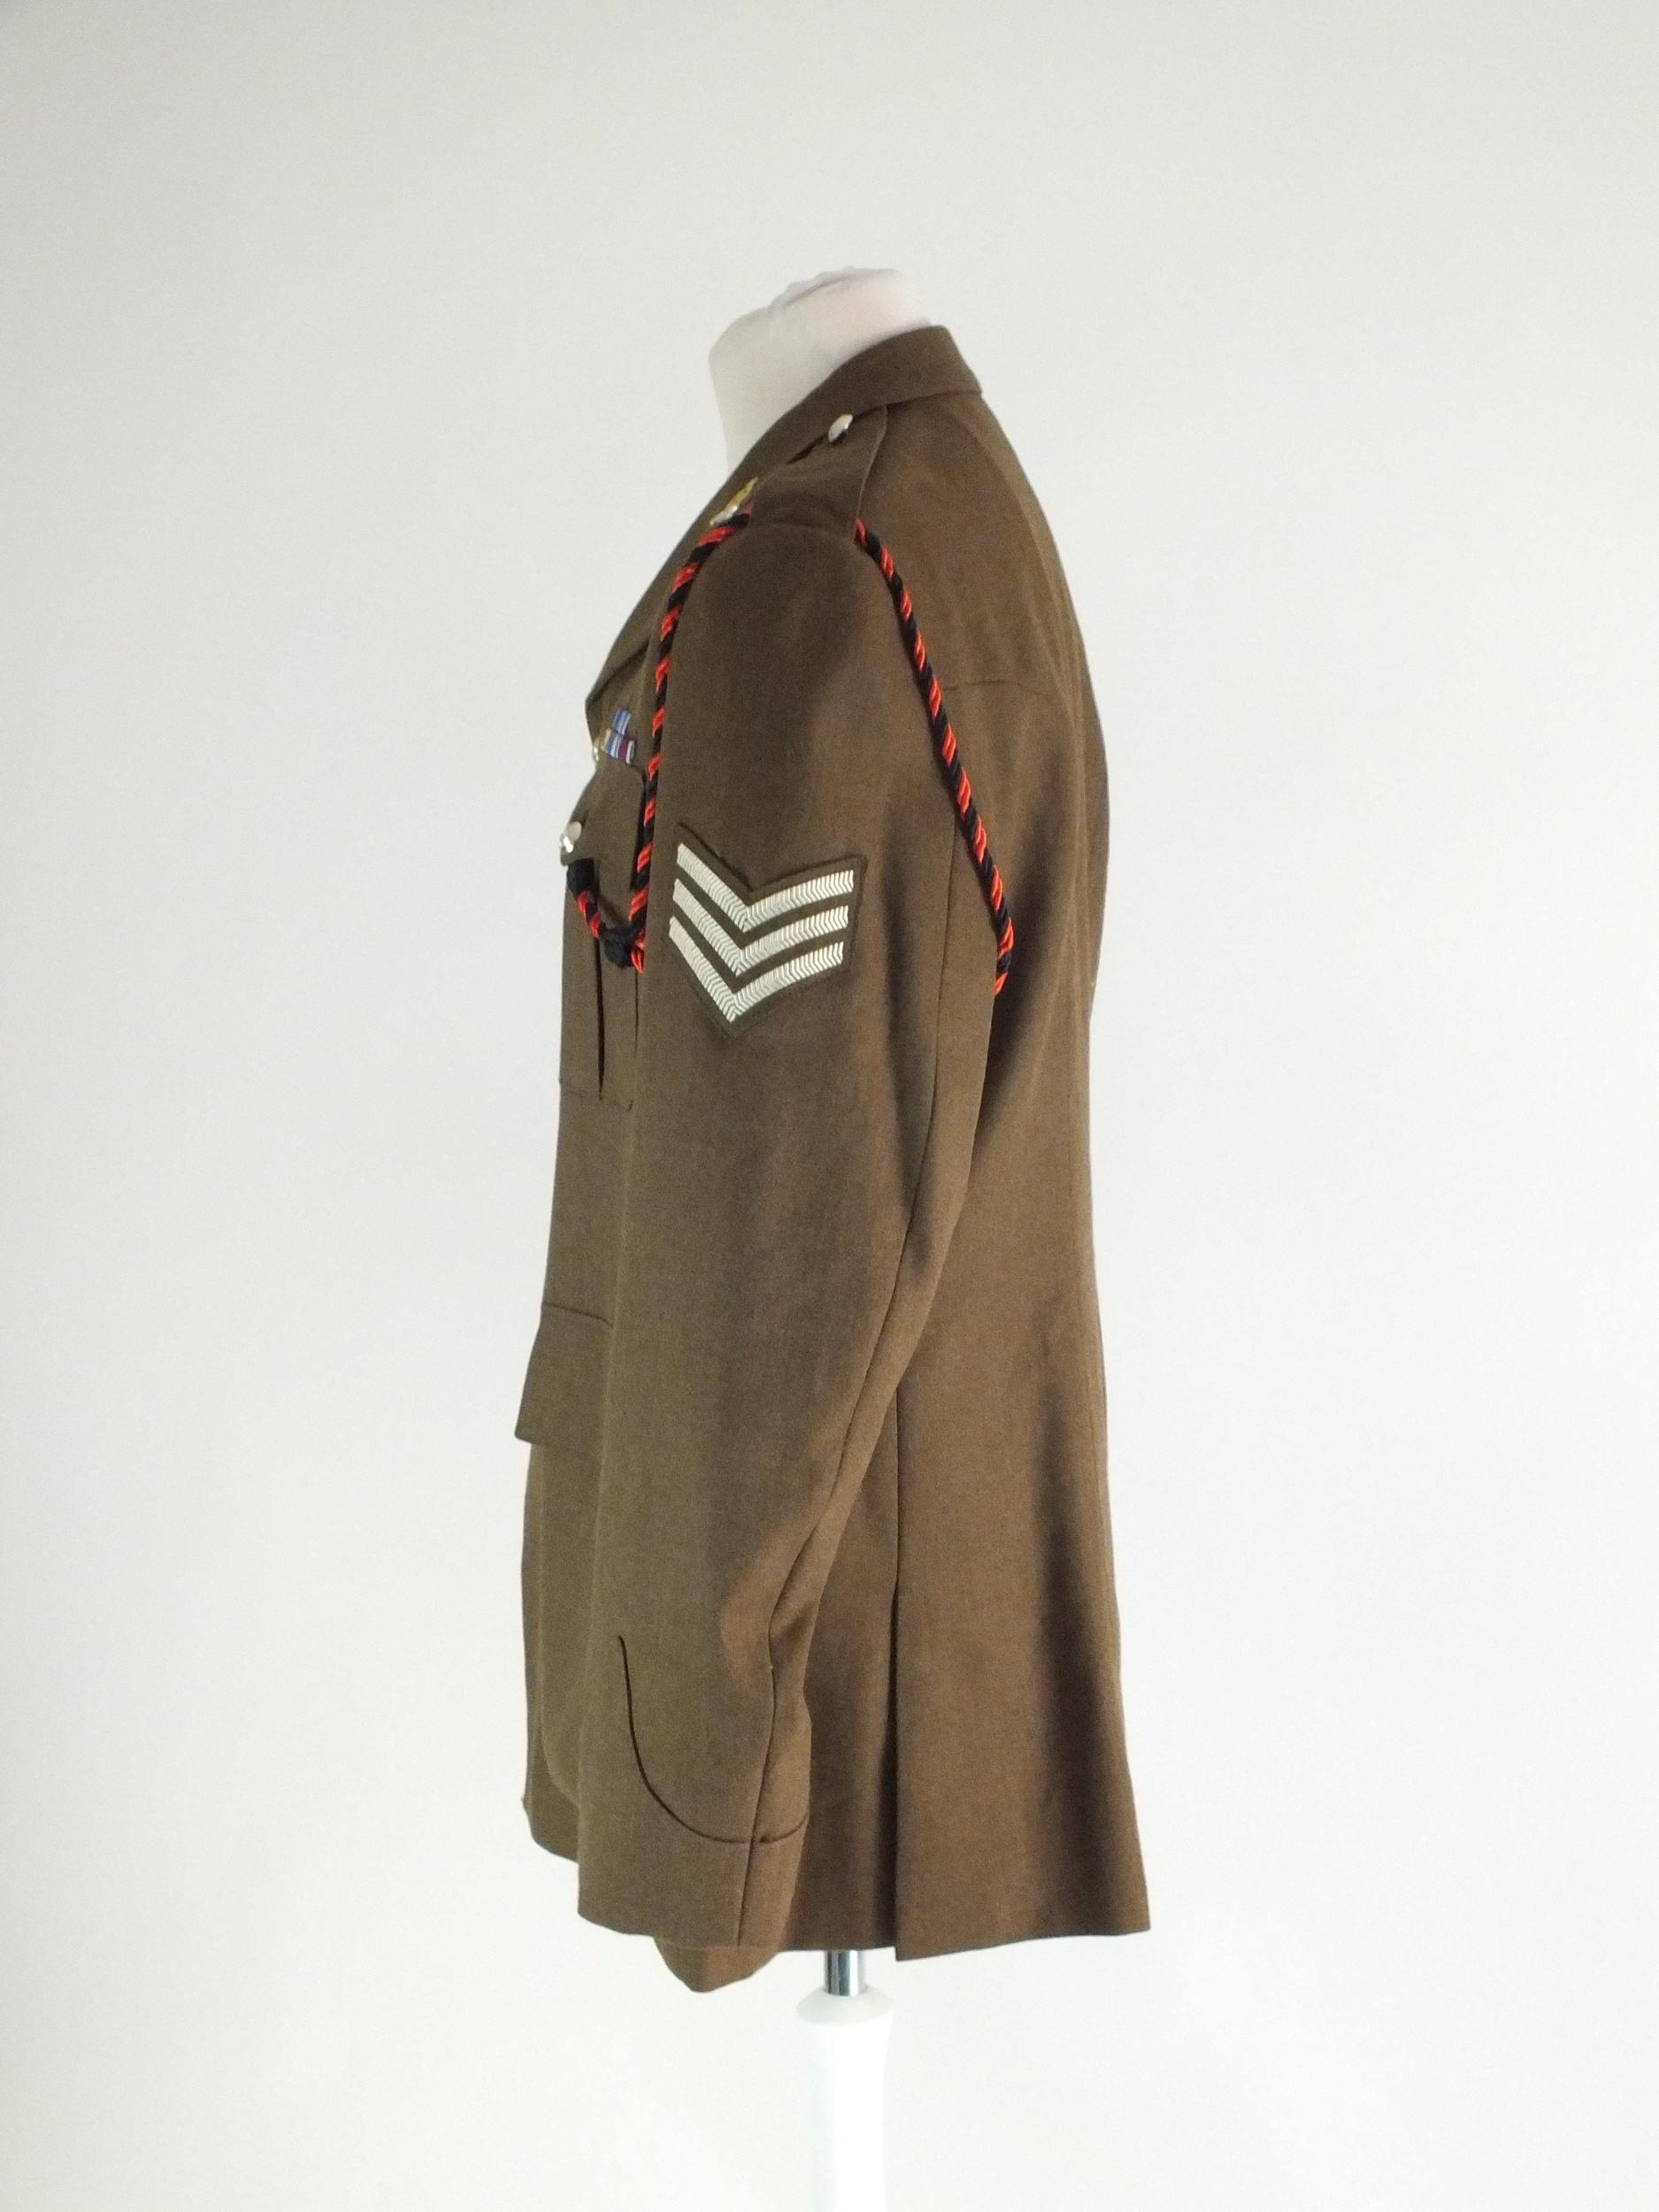 British Army Adjutant General Corps uniform - Image 2 of 4